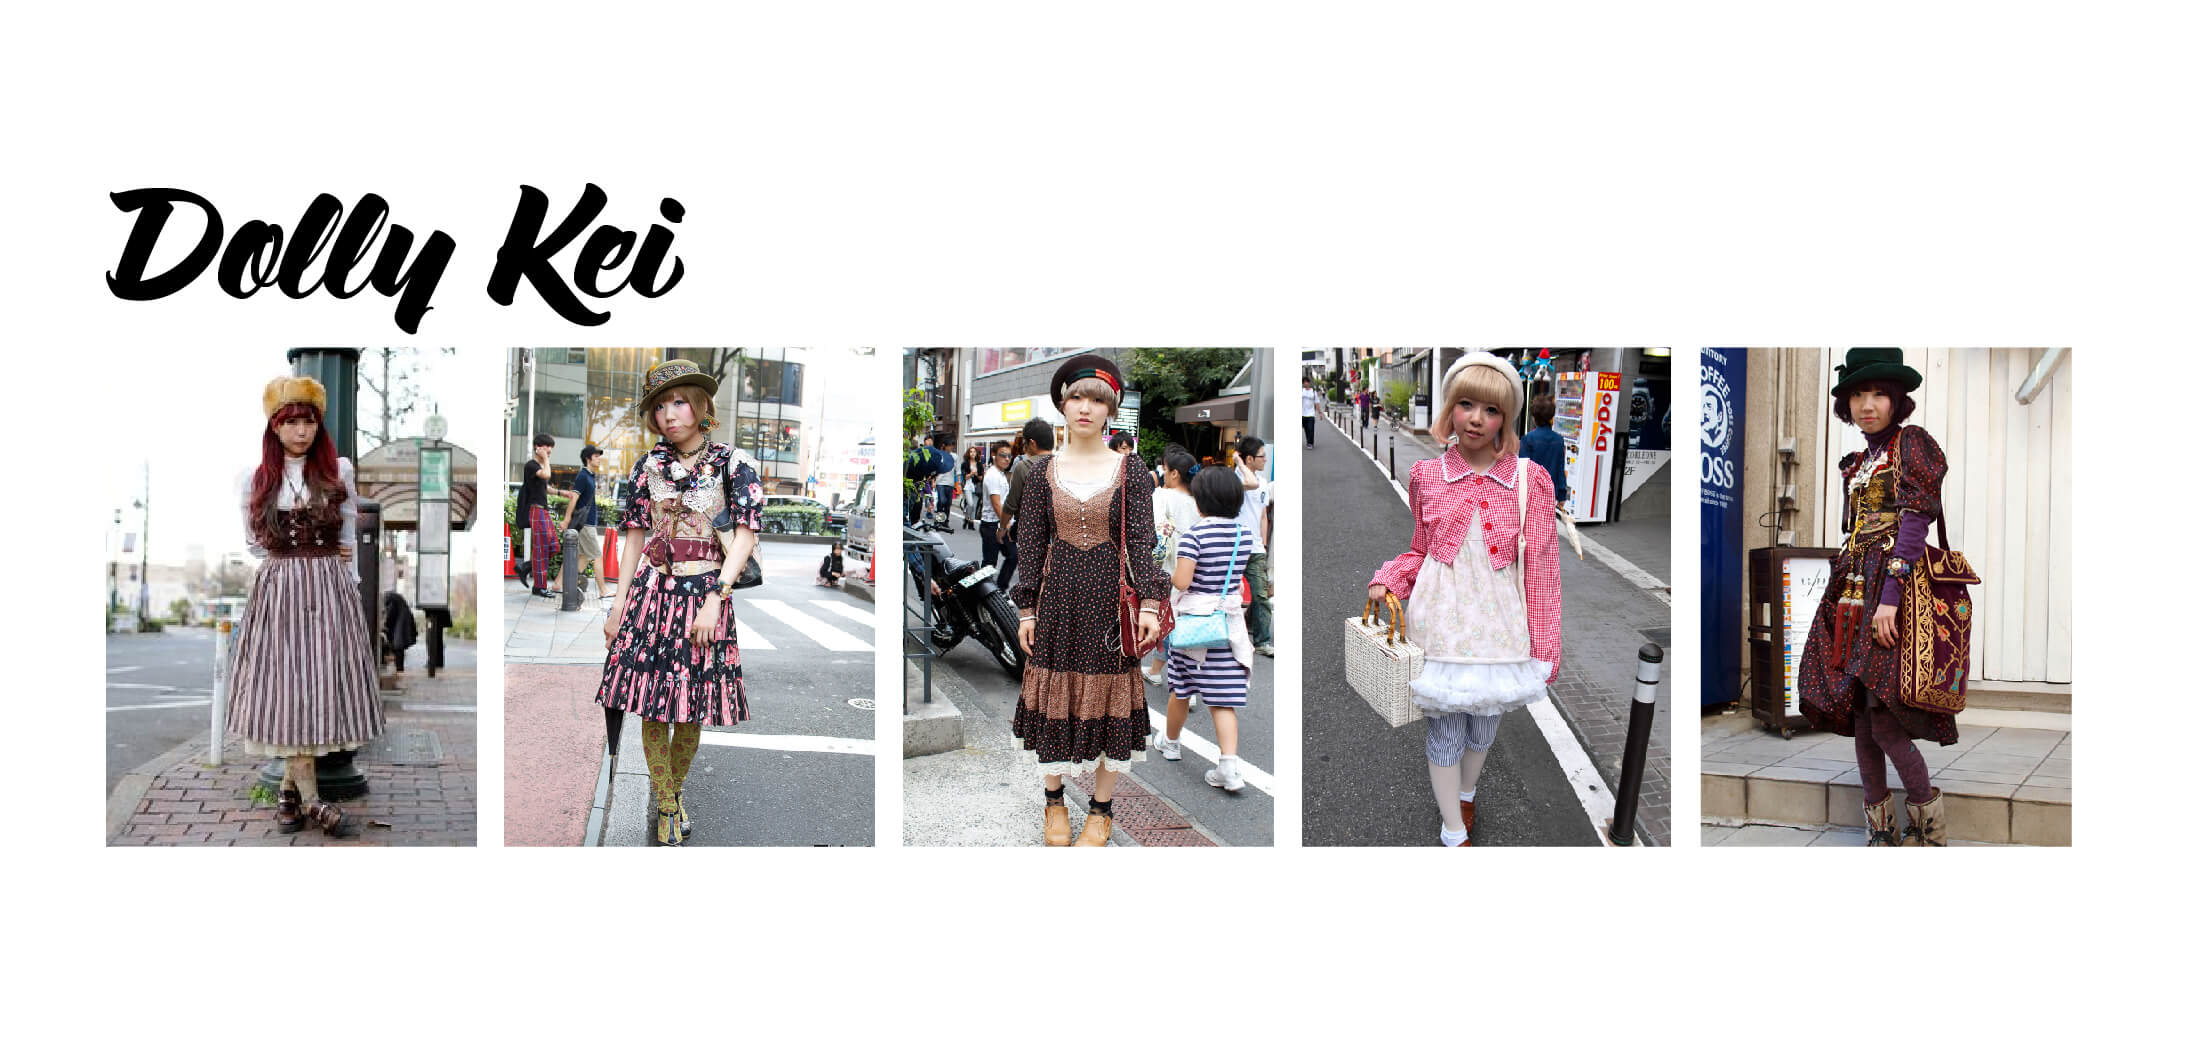 Examples of Dolly Kei Fashion (Japanese Fashion)